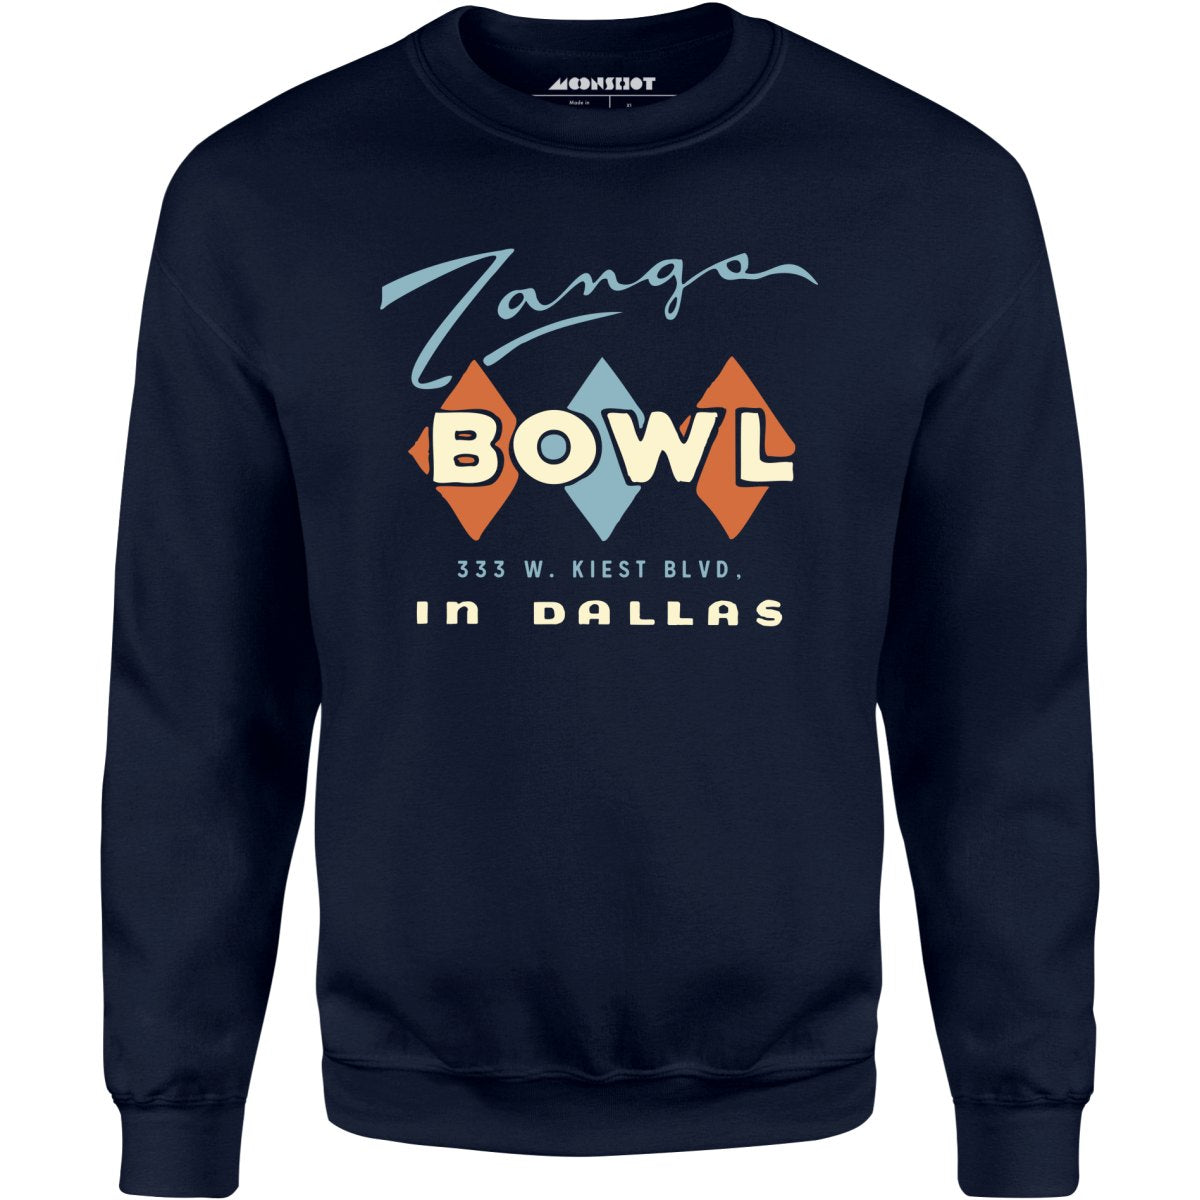 Zangs Bowl - Dallas, TX - Vintage Bowling Alley - Unisex Sweatshirt